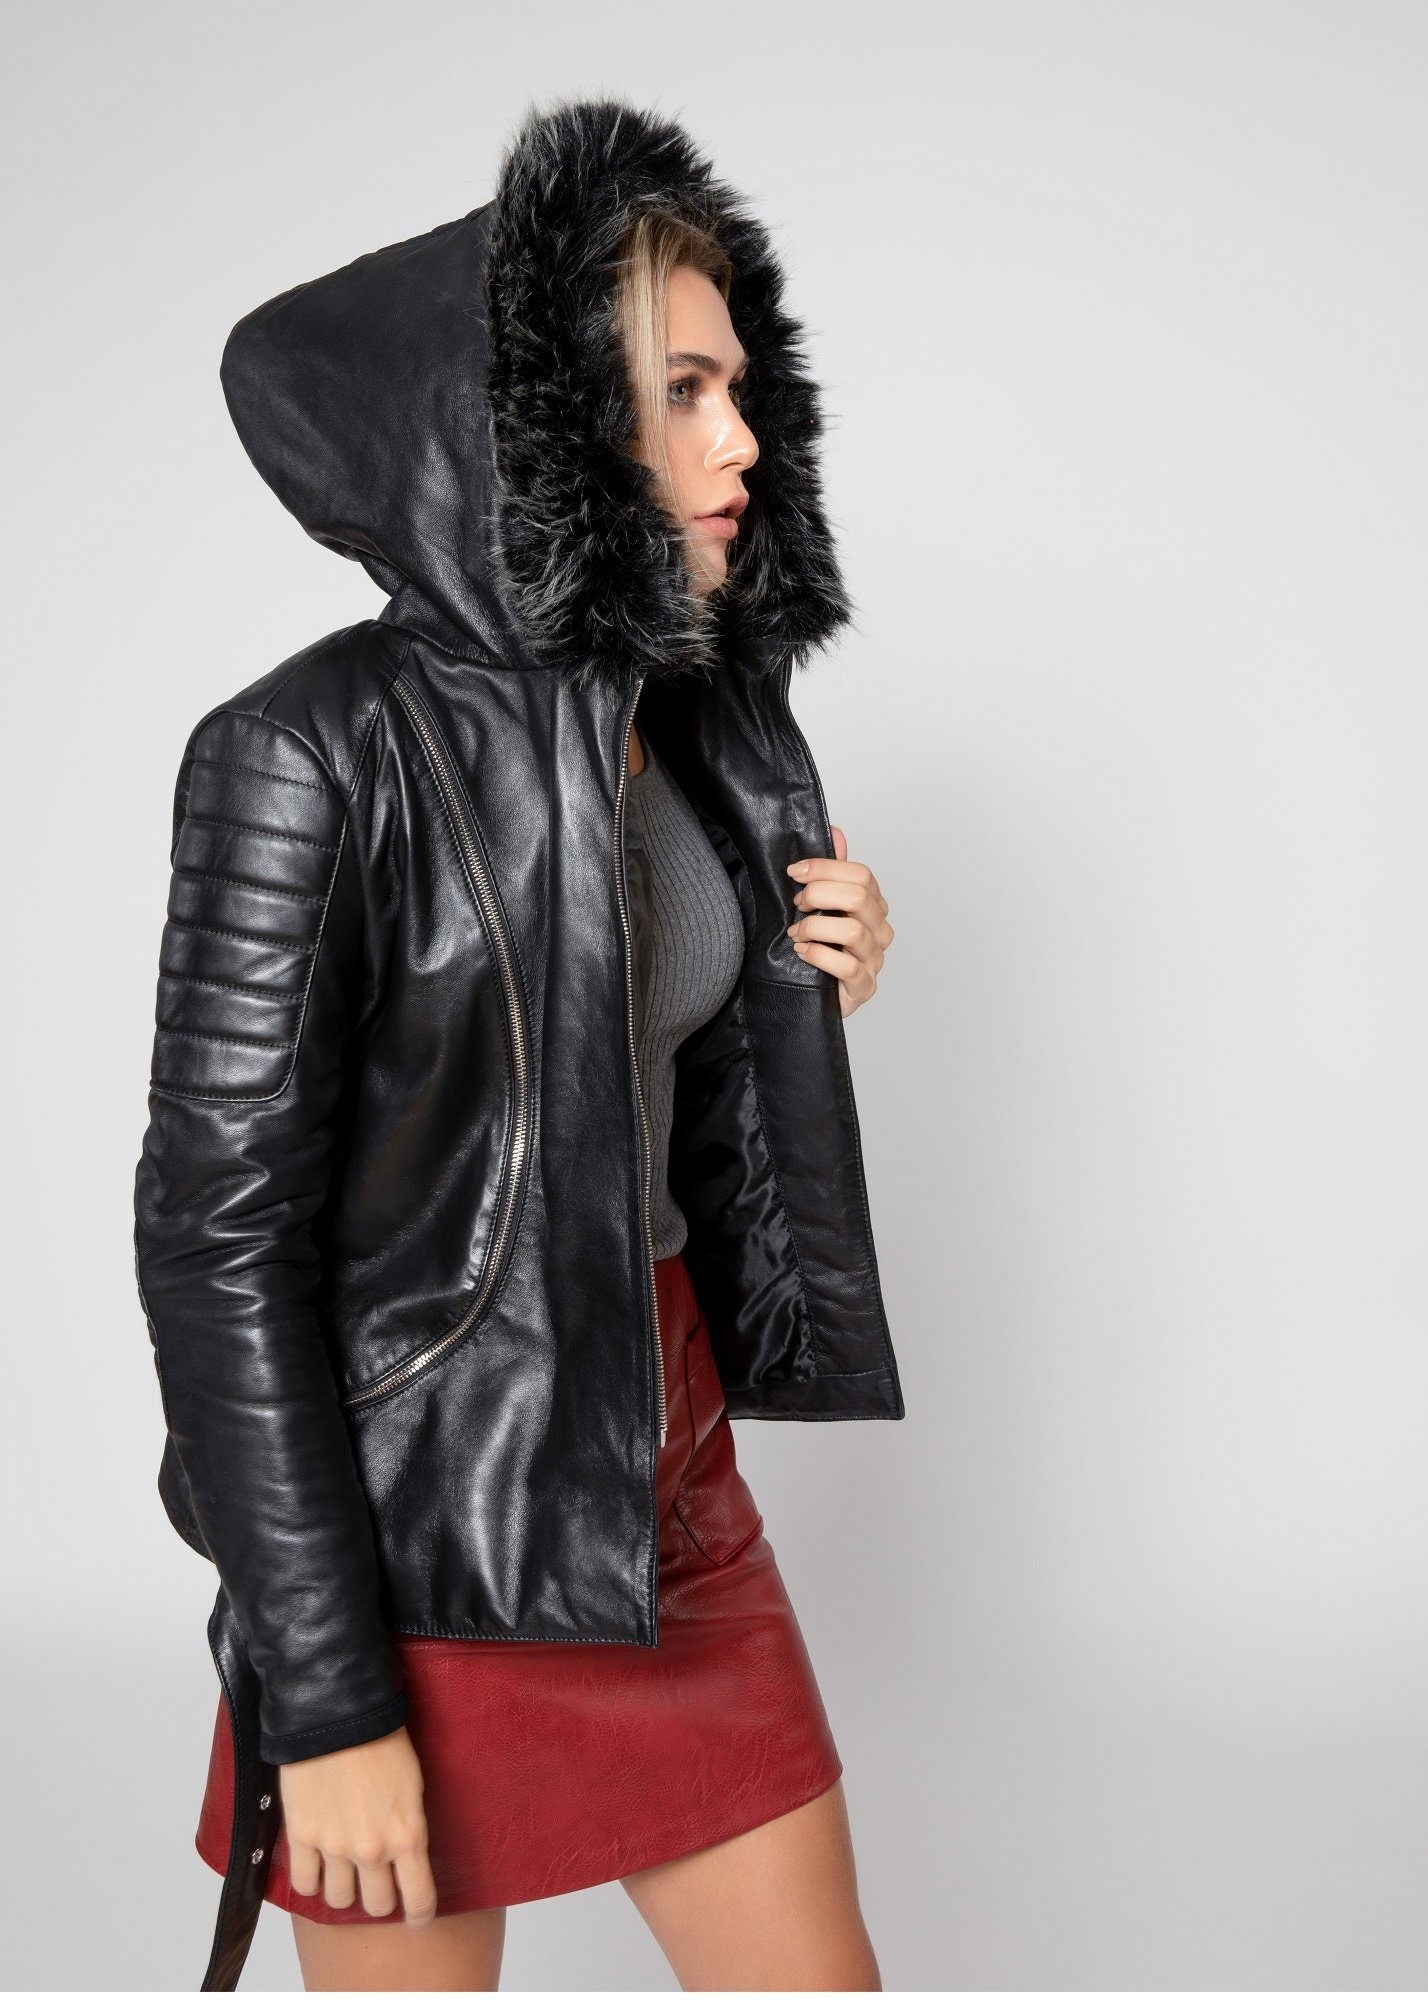 Womens Leather Jacket - Women's Poseidon Leather Jacket With Fur Hoodie